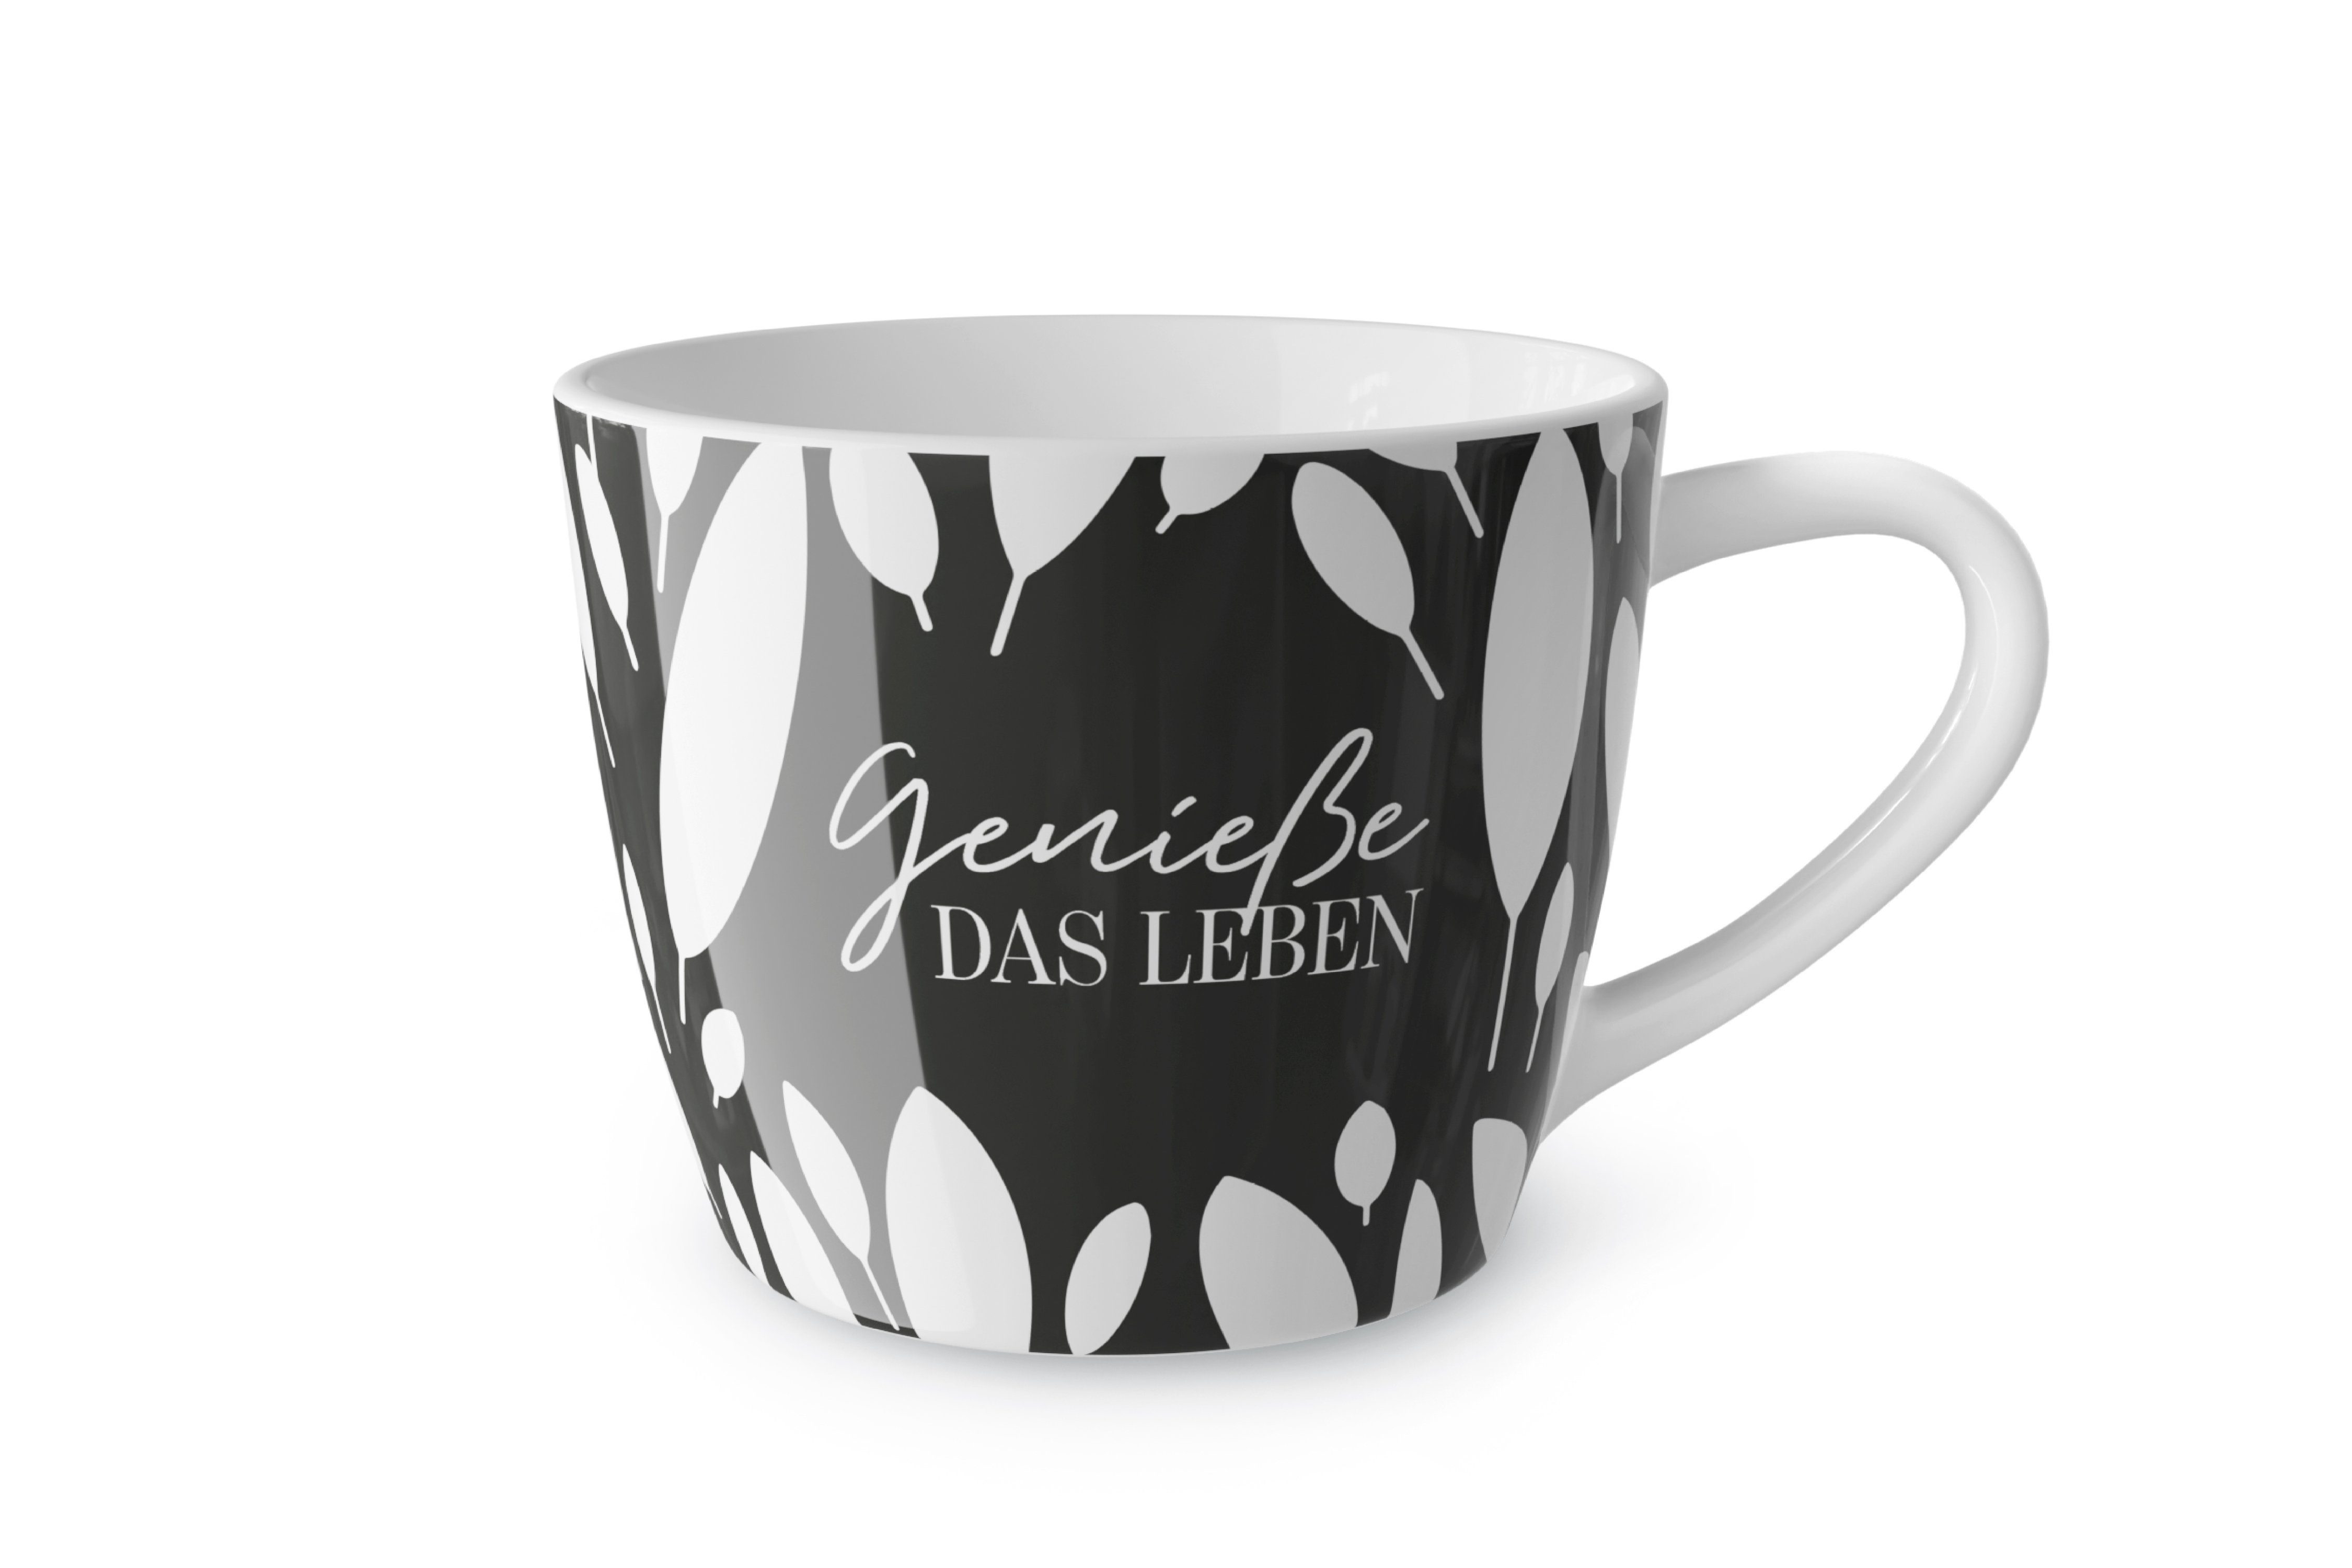 La Vida Tasse Kaffeetasse Teetasse Tasse Maxi Becher für dich la vida "Geniesse, Material: Porzellan